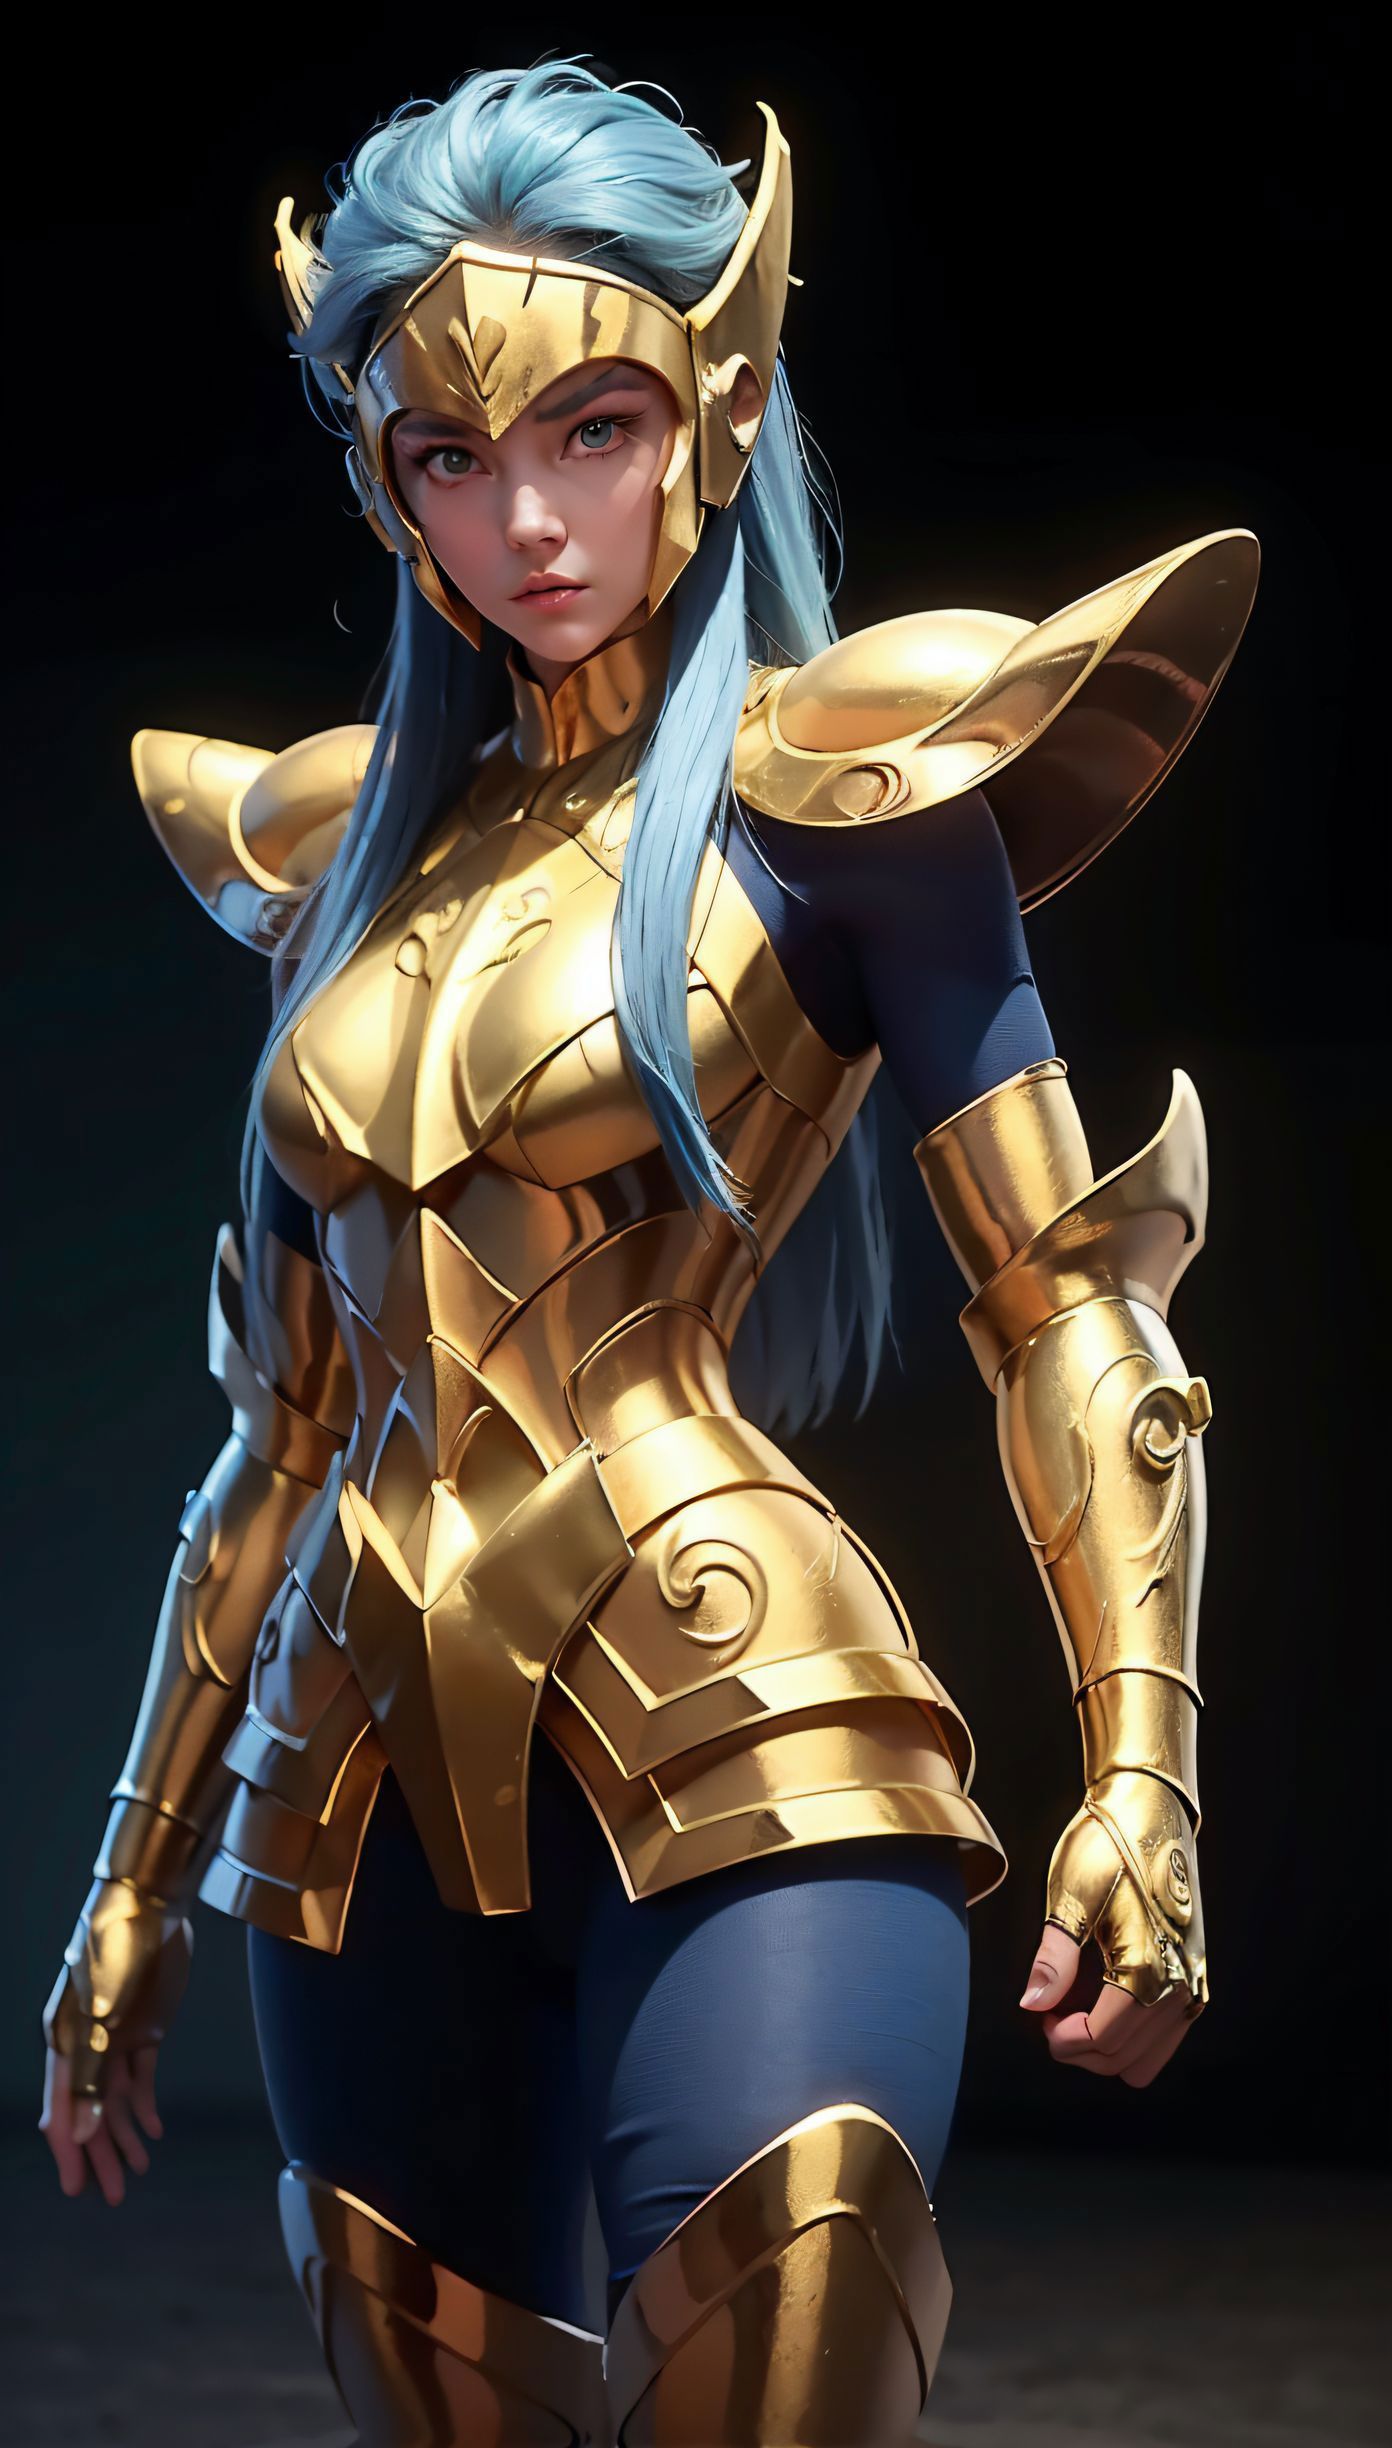 Saint Seiya Zodiac Aquarius Gold Armor image by ringtmp674